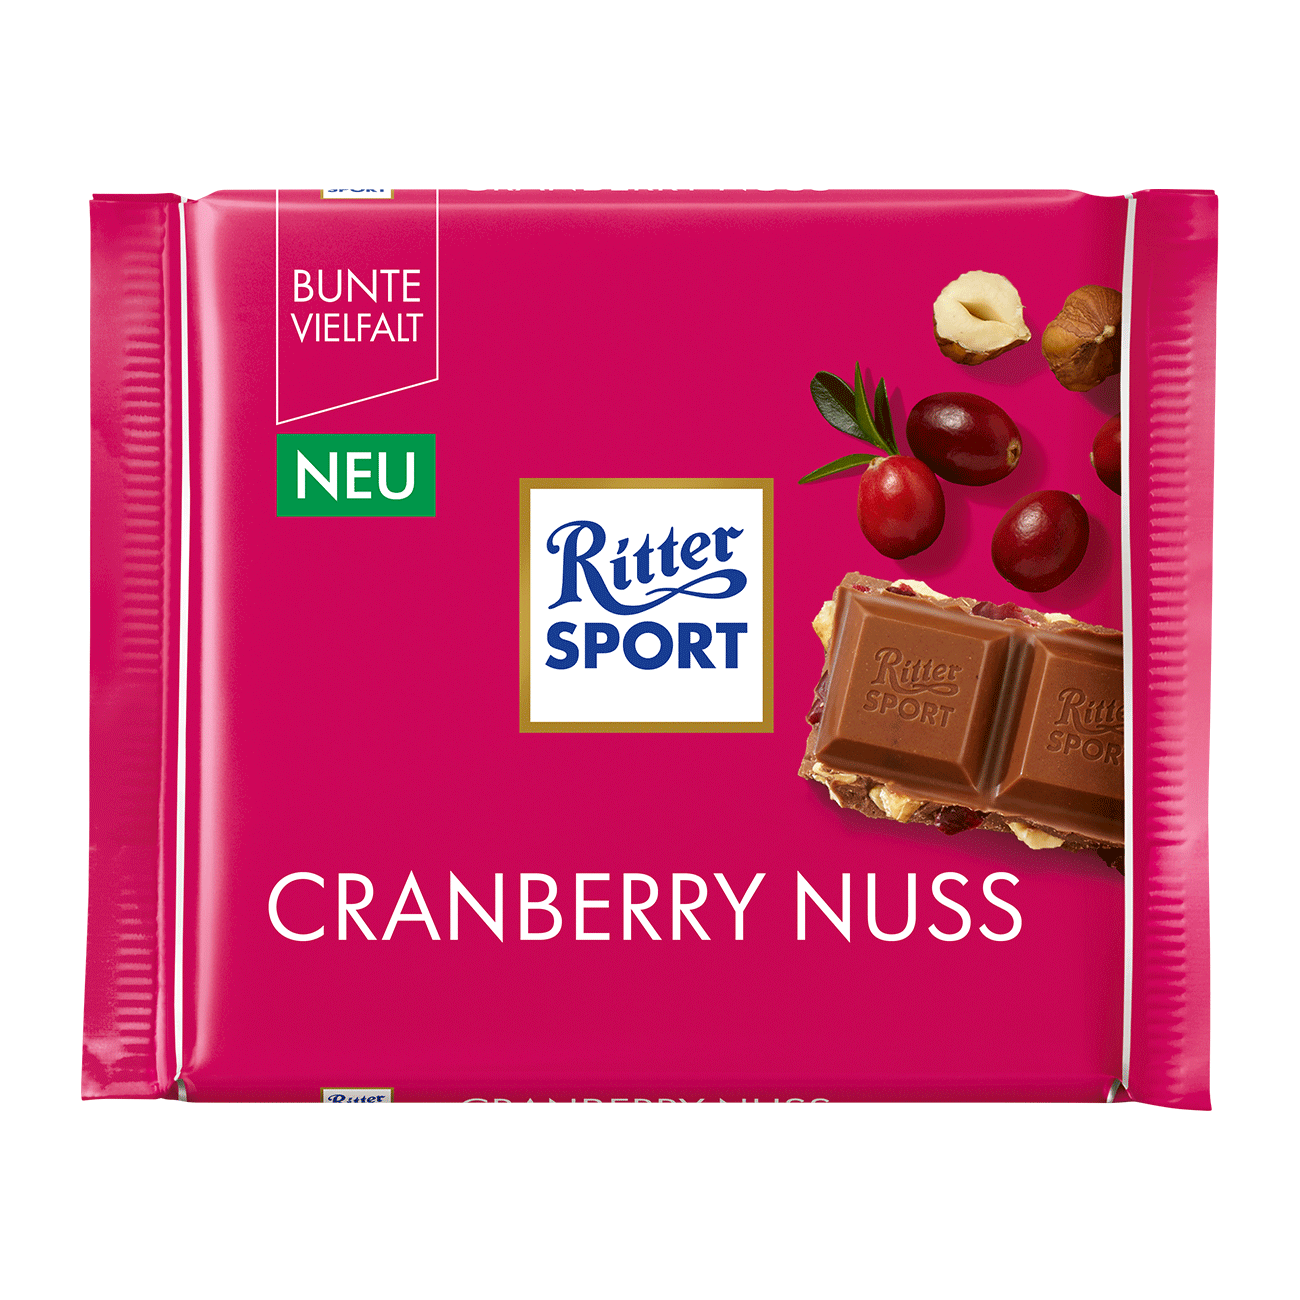 Cranberry Nuss